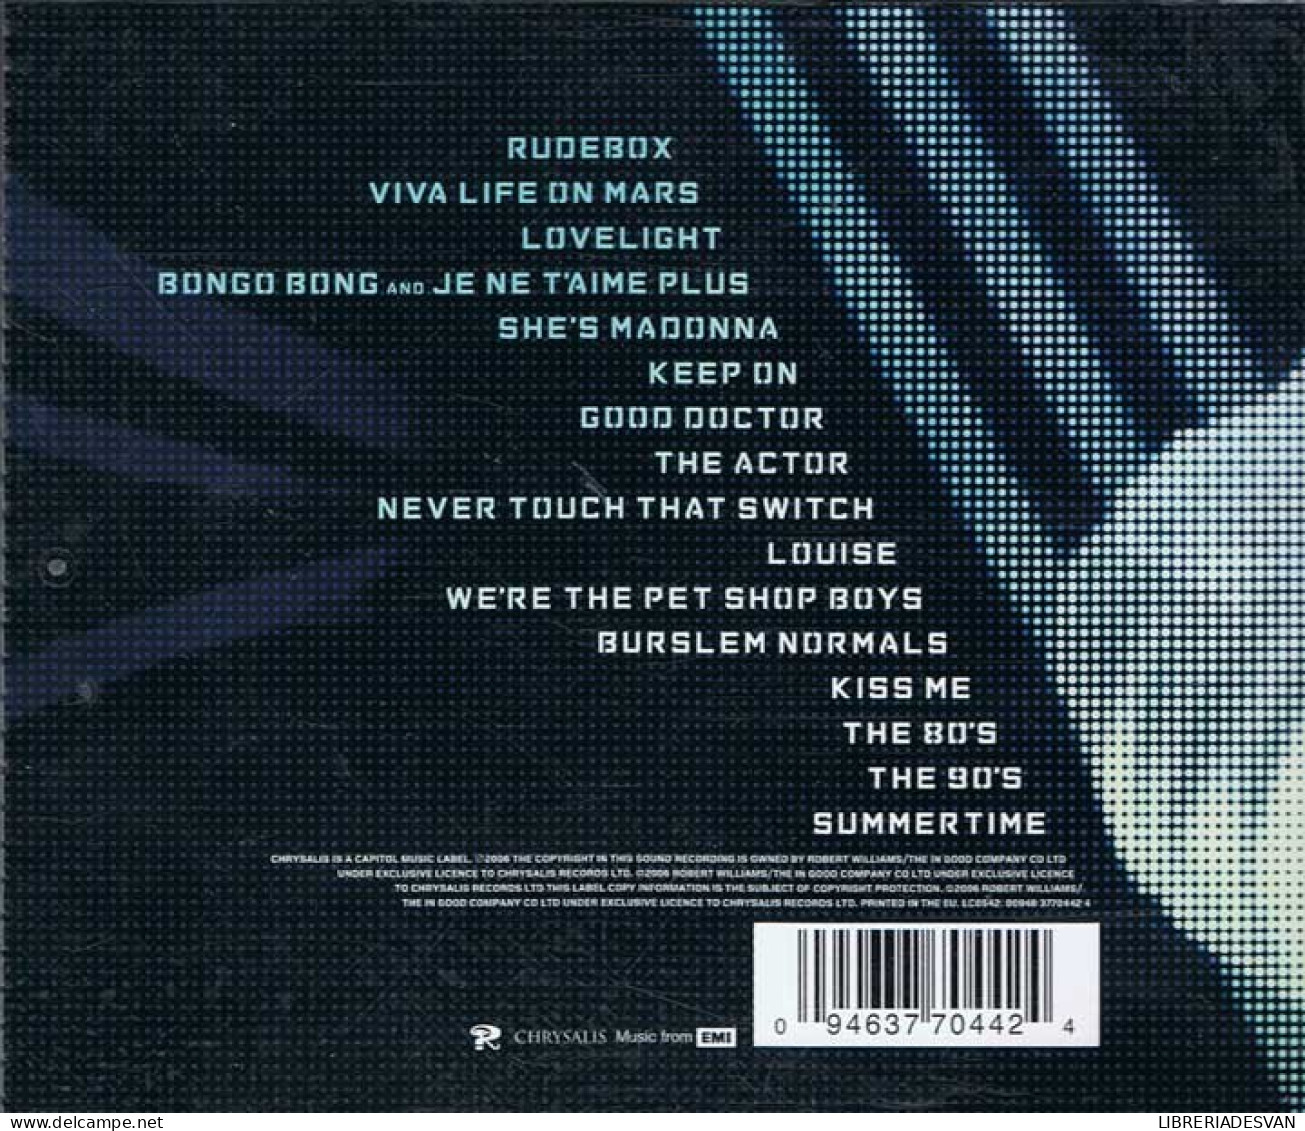 Robbie Williams - Rudebox. CD - Disco, Pop